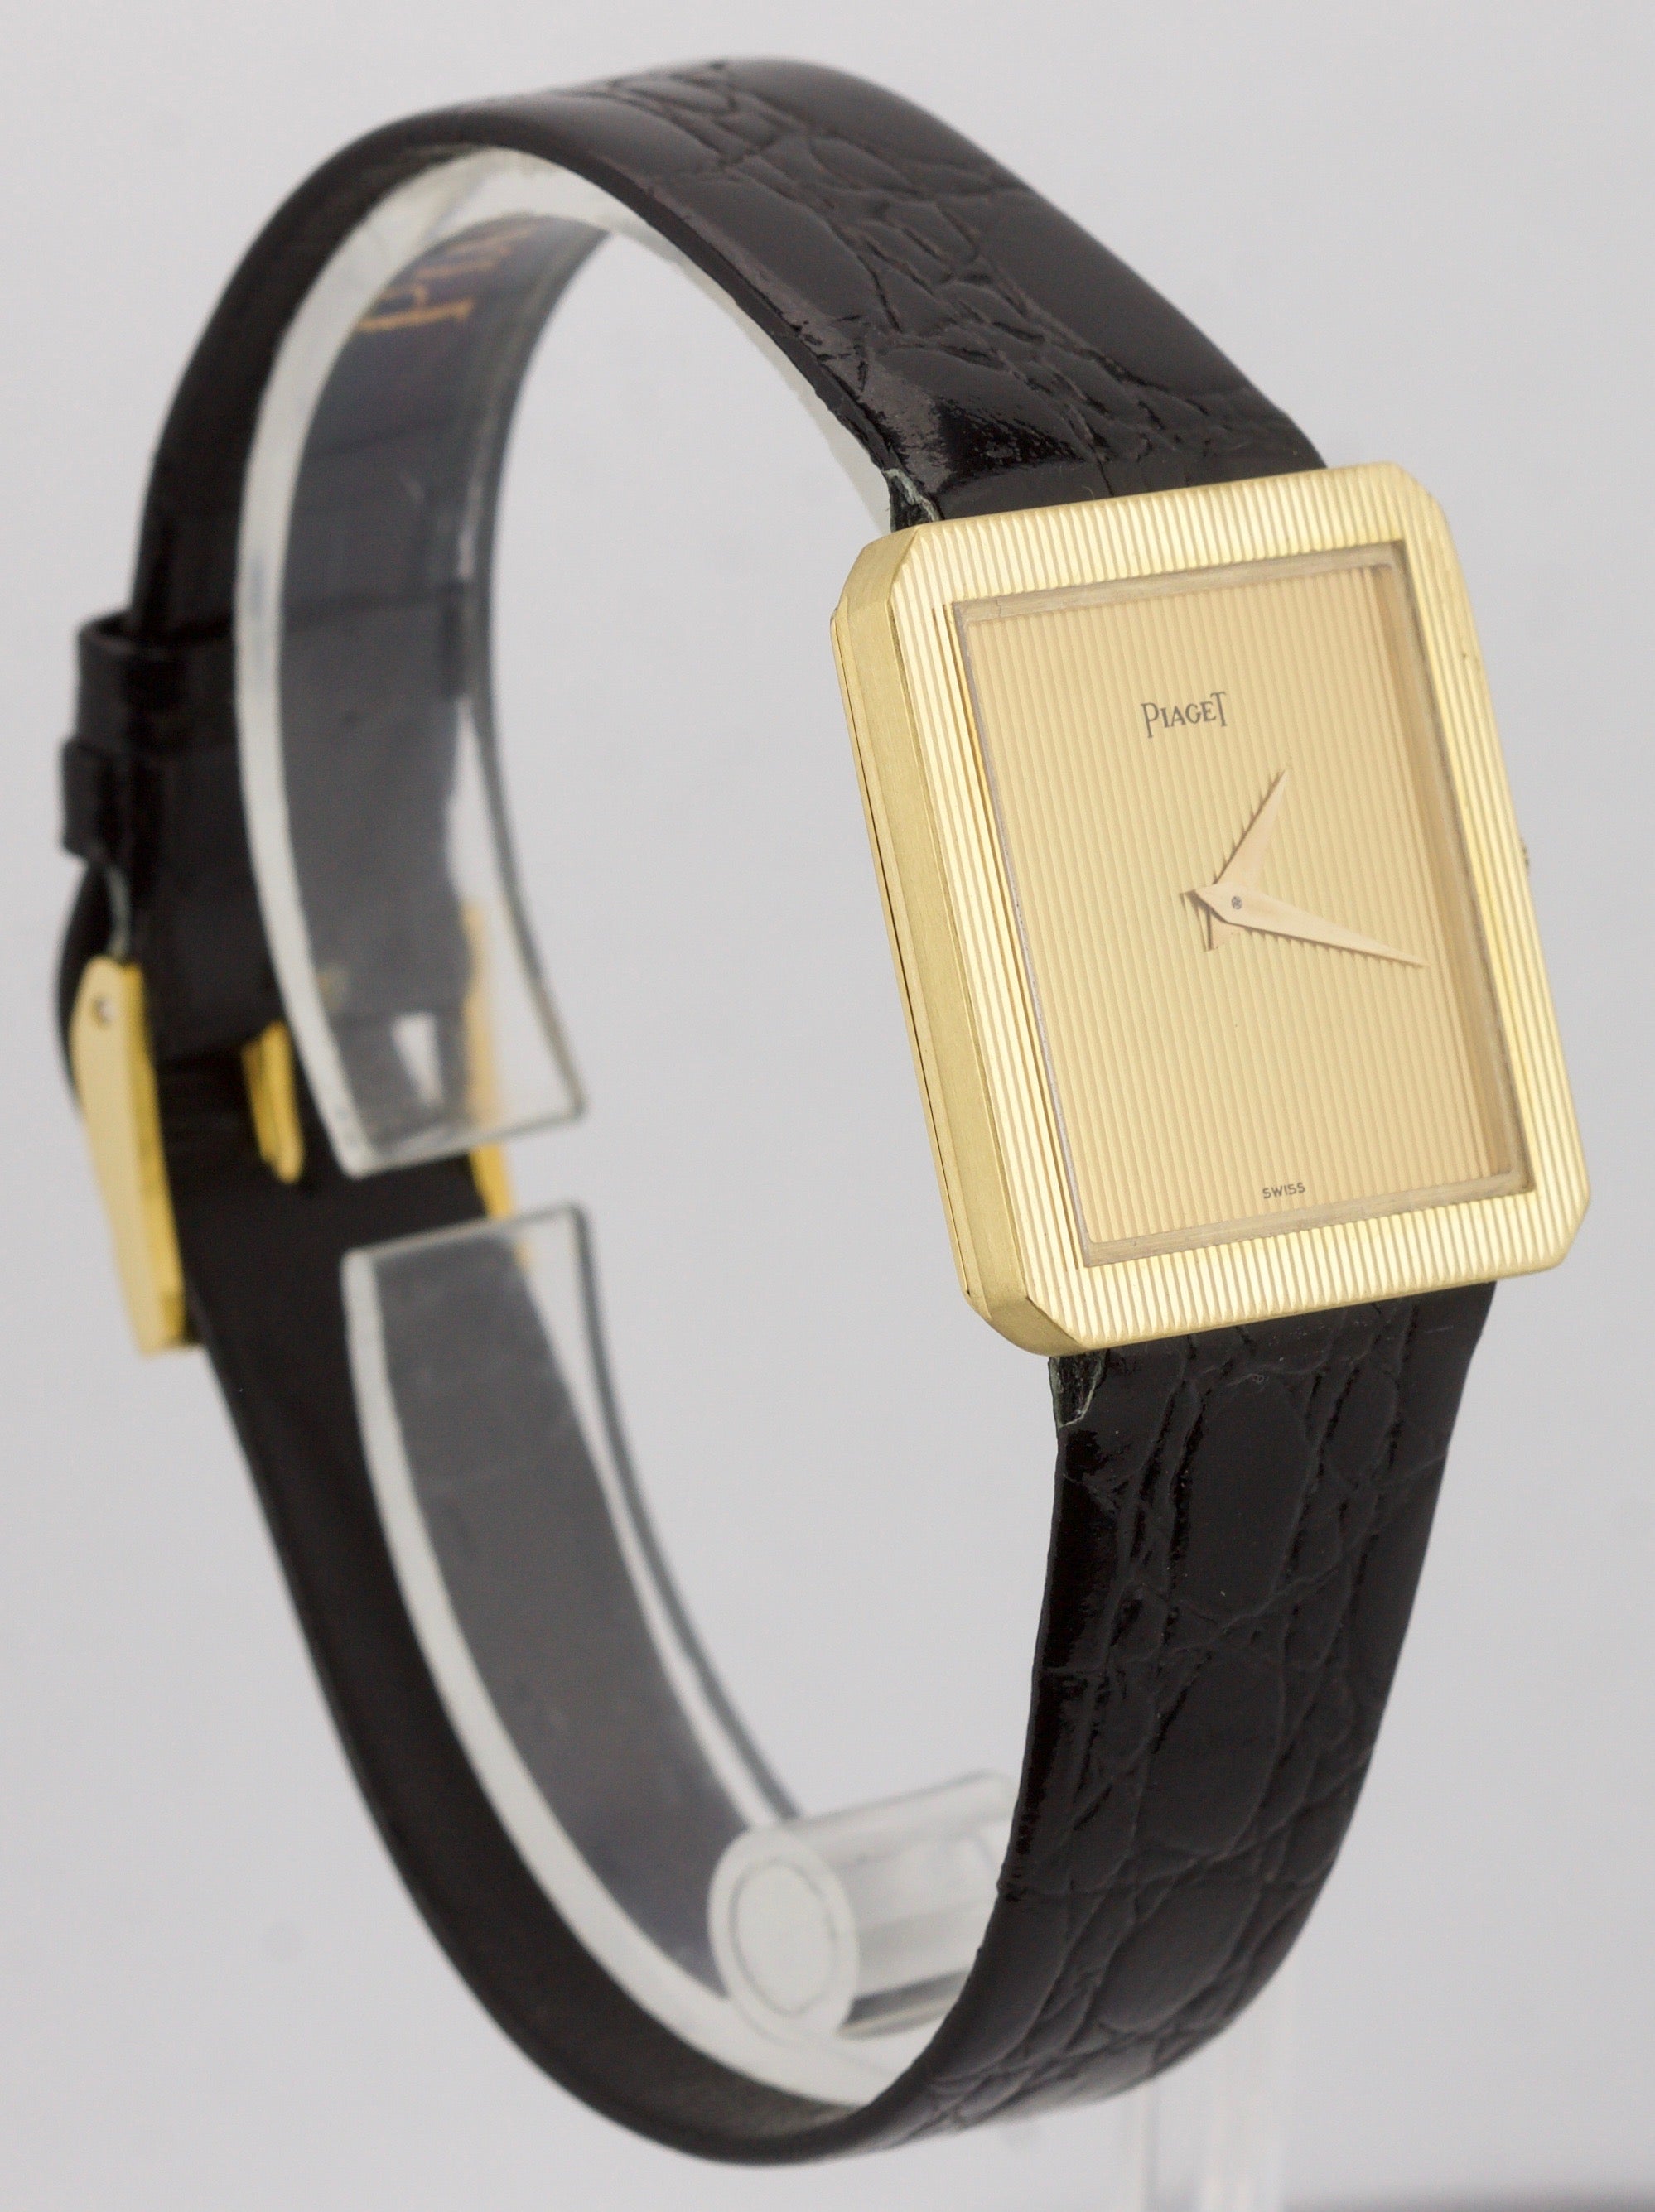 Piaget Protocole 25mm Quartz 8154 Champagne 18K Yellow Gold Leather Watch